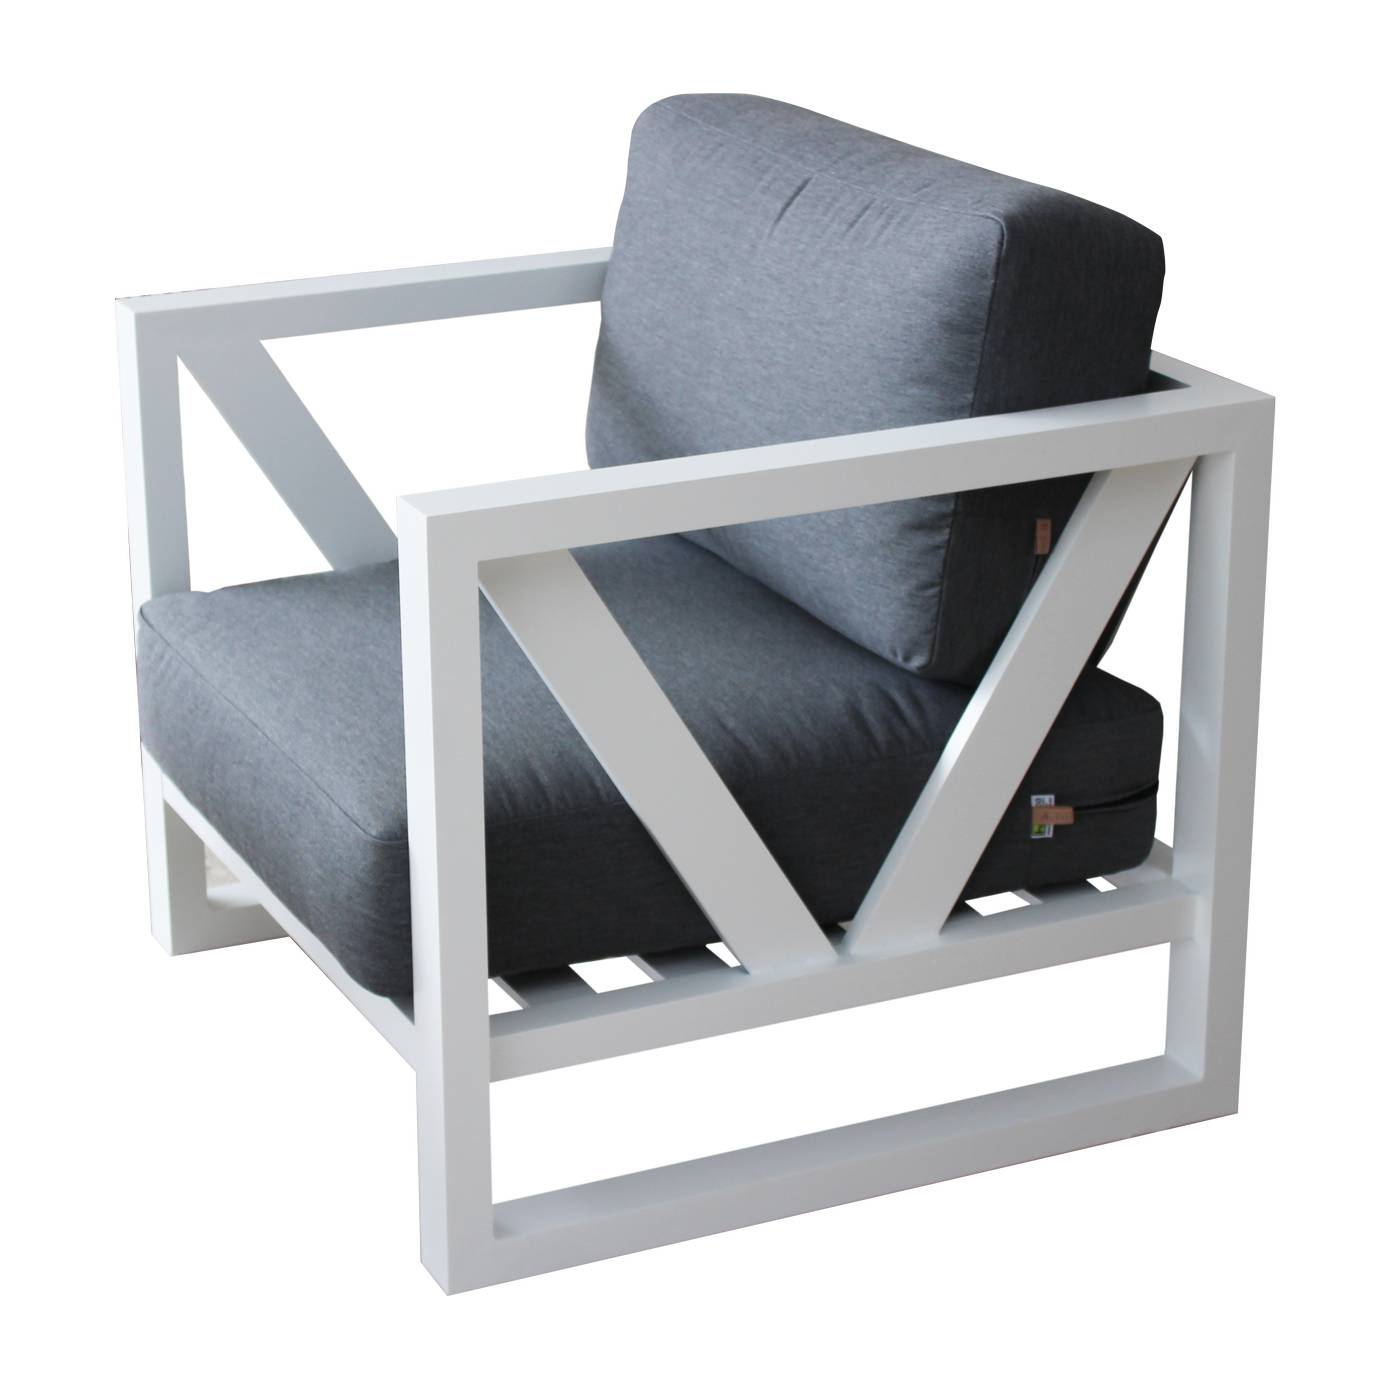 Set Aluminio Luxe Ventus-8 - Lujoso conjunto de aluminio: sofá 3 plazas + 2 sillones + mesa de centro. Color conjunto: blanco, antracita, champagne, plata o marrón.